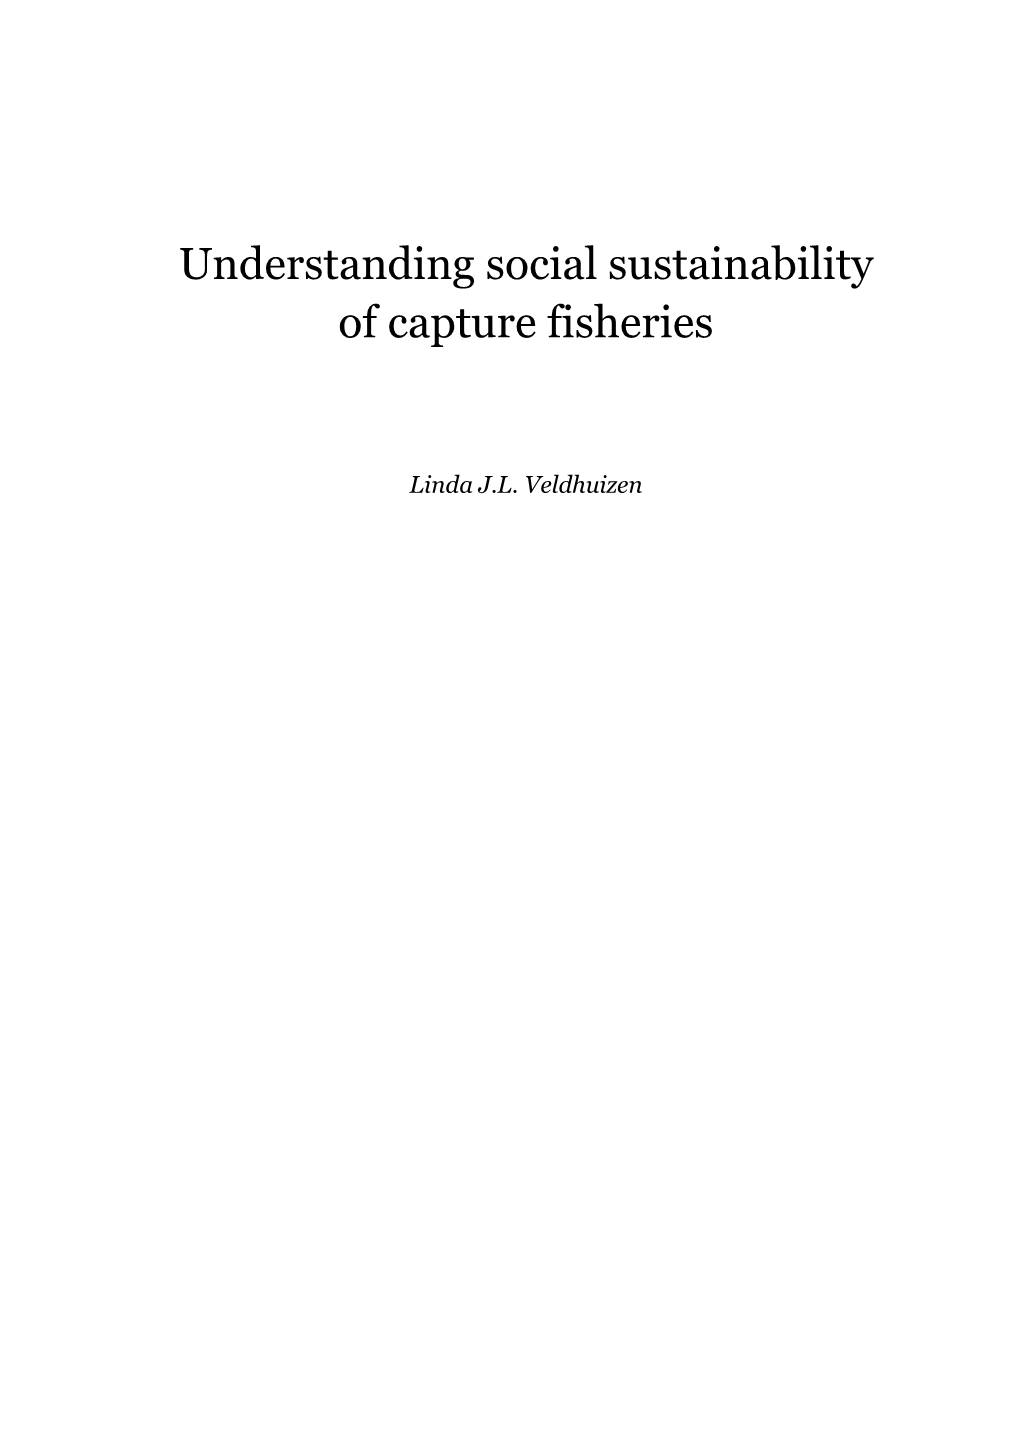 Understanding Social Sustainability of Capture Fisheries